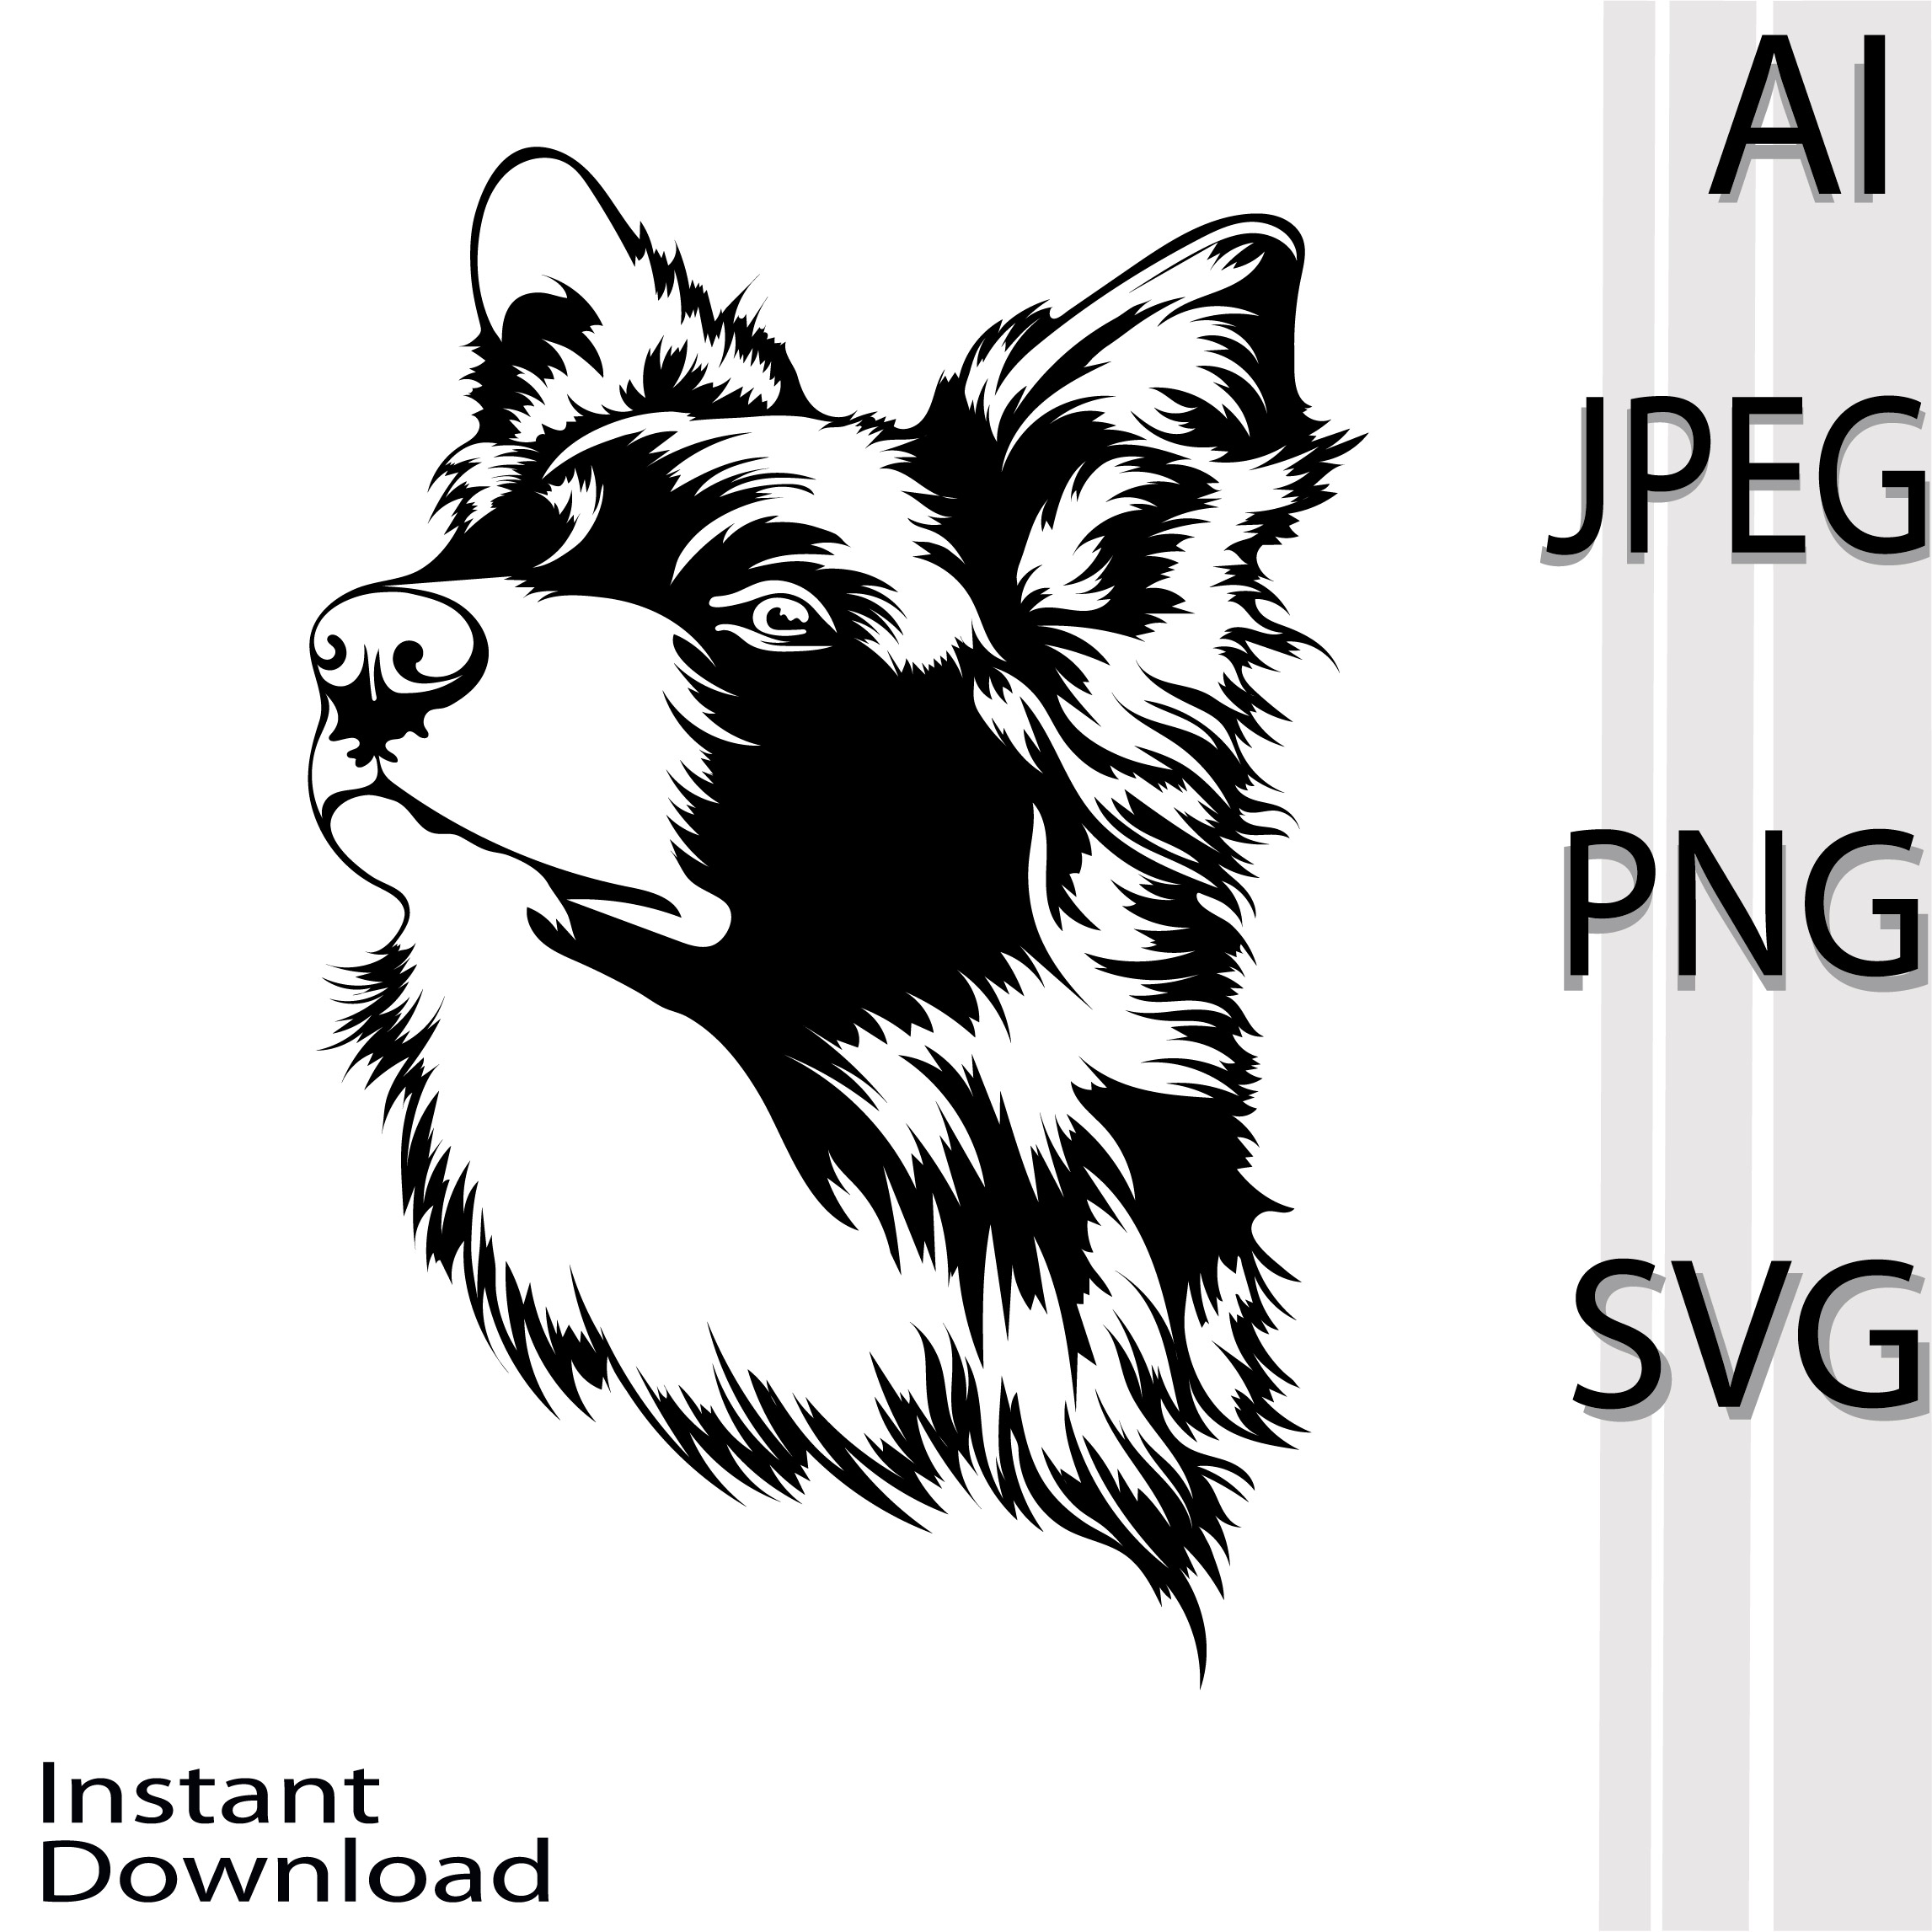 Border Collie Dog SVG main cover.